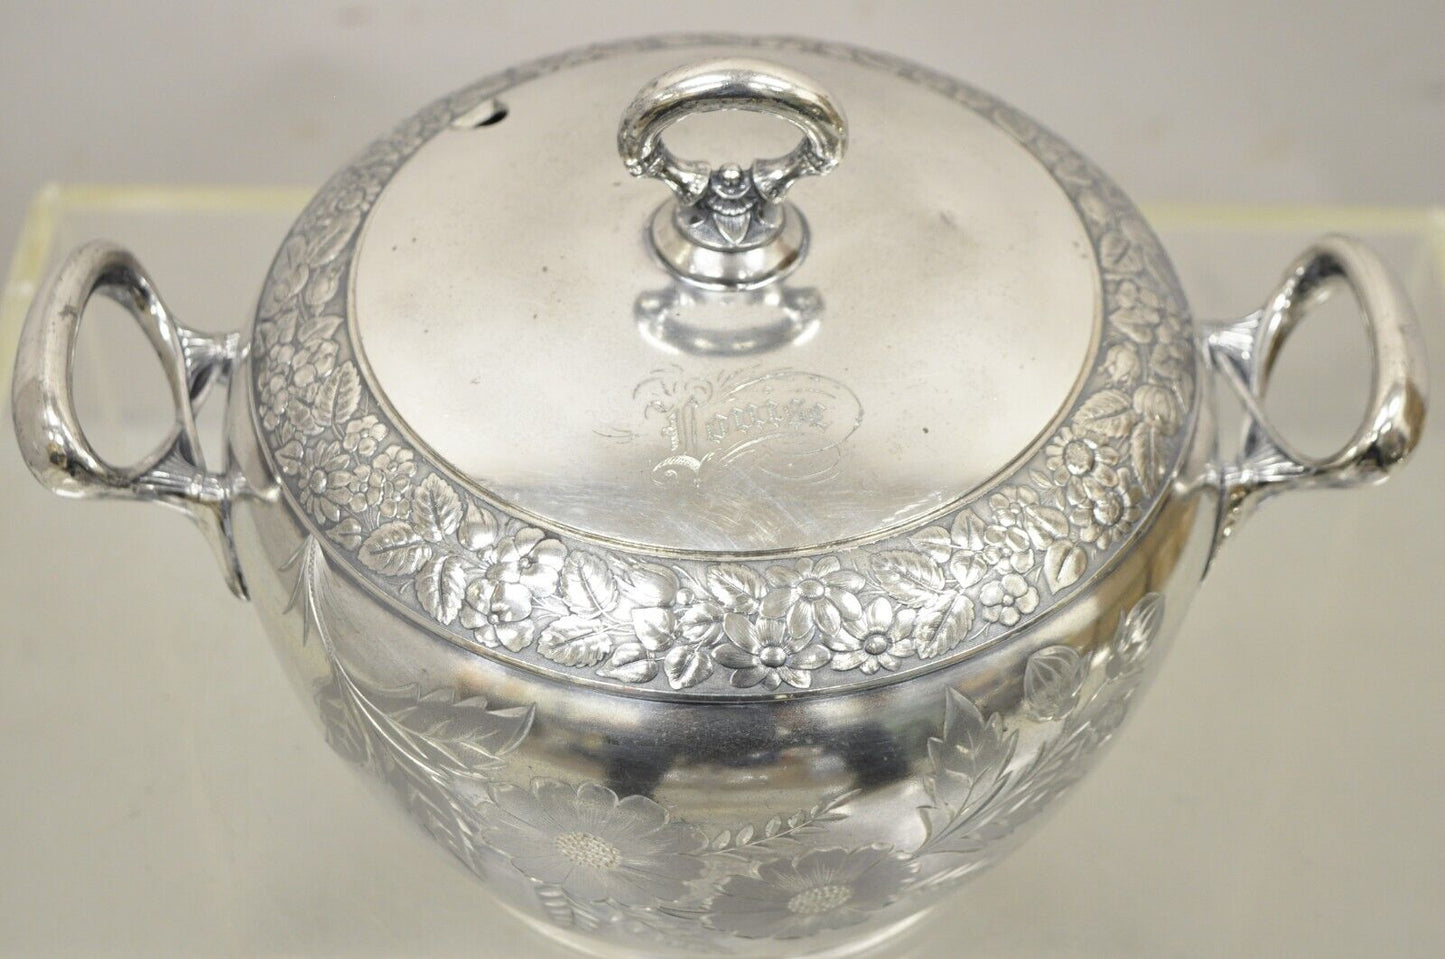 Antique Art Nouveau Silver Plated Lidded Soup Tureen engraved "Louise"